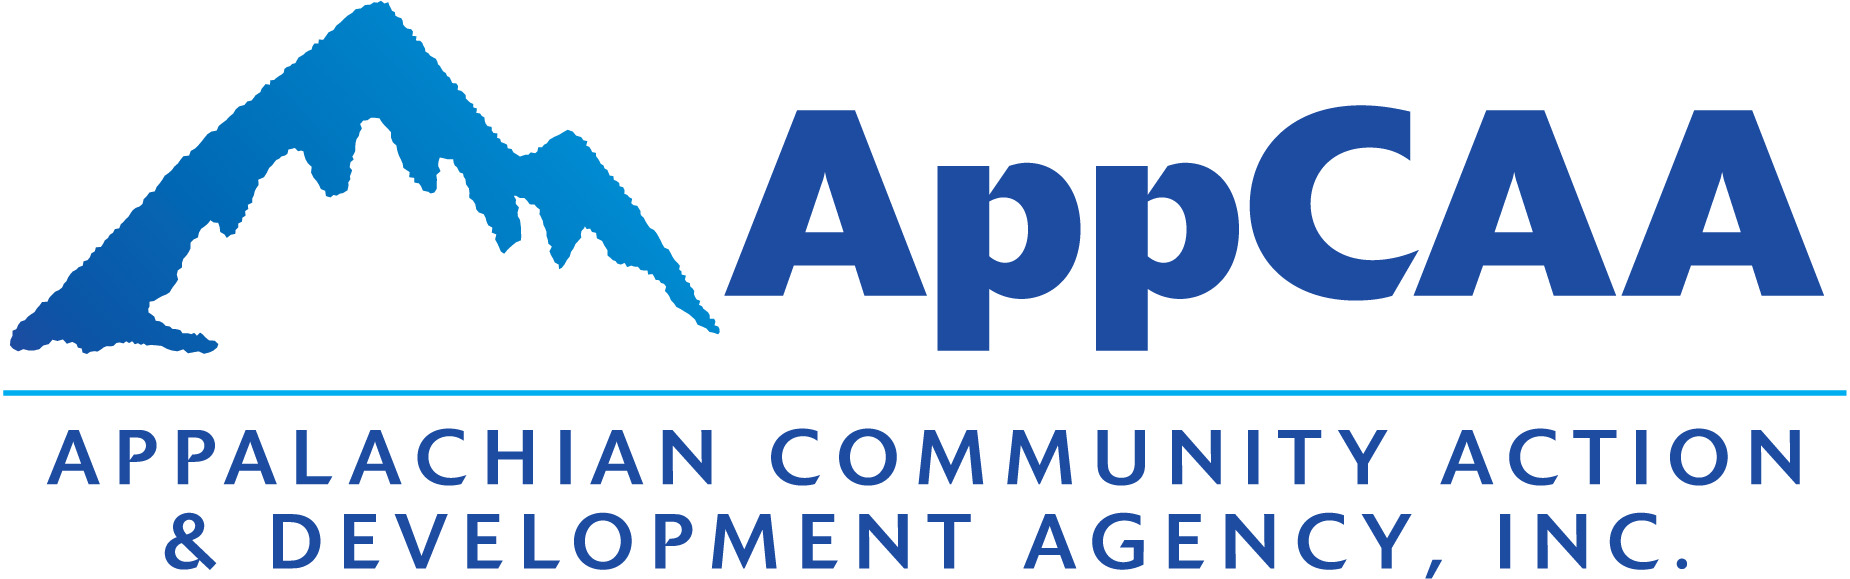 Appalachian Community Action and Development Agency